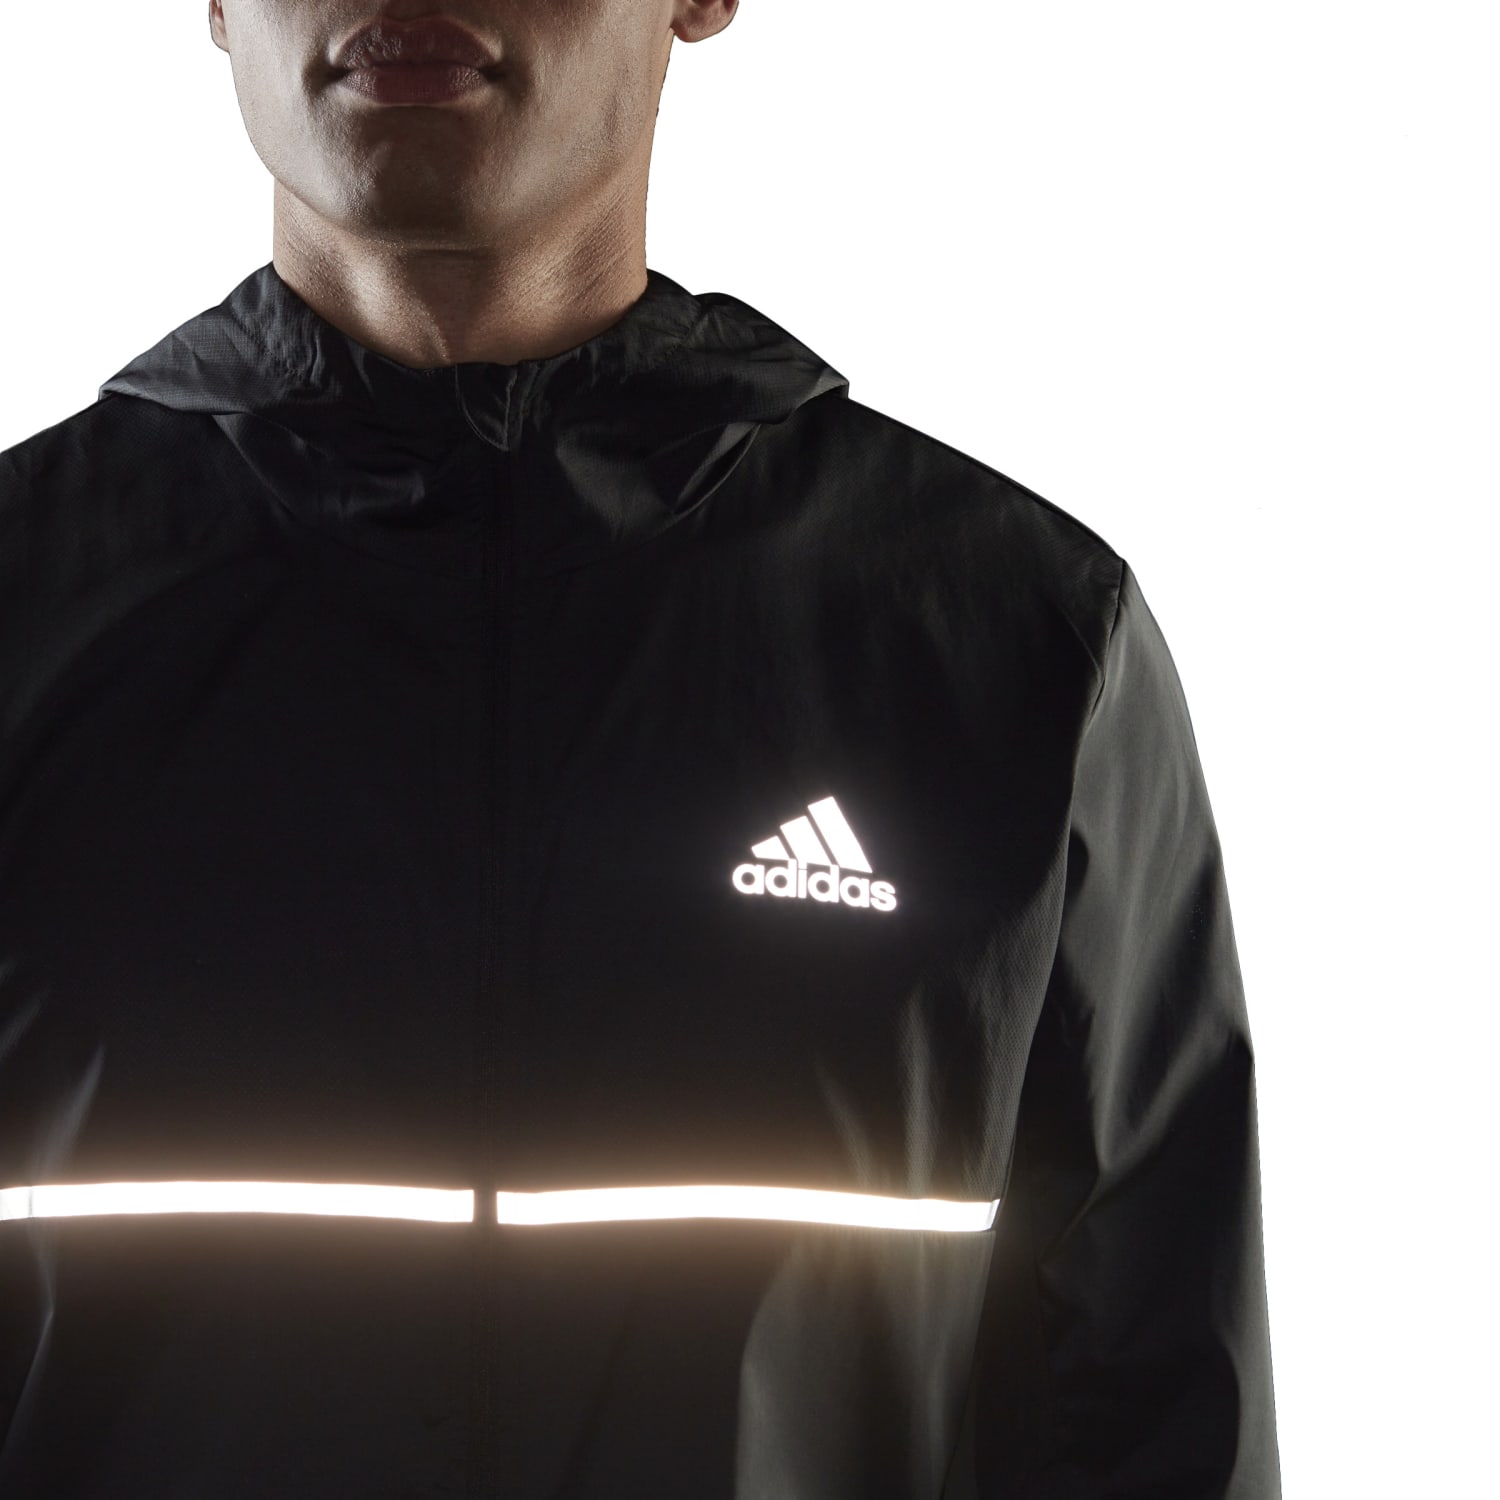 adidas Own The Run Jacket - Black/Reflective Silver